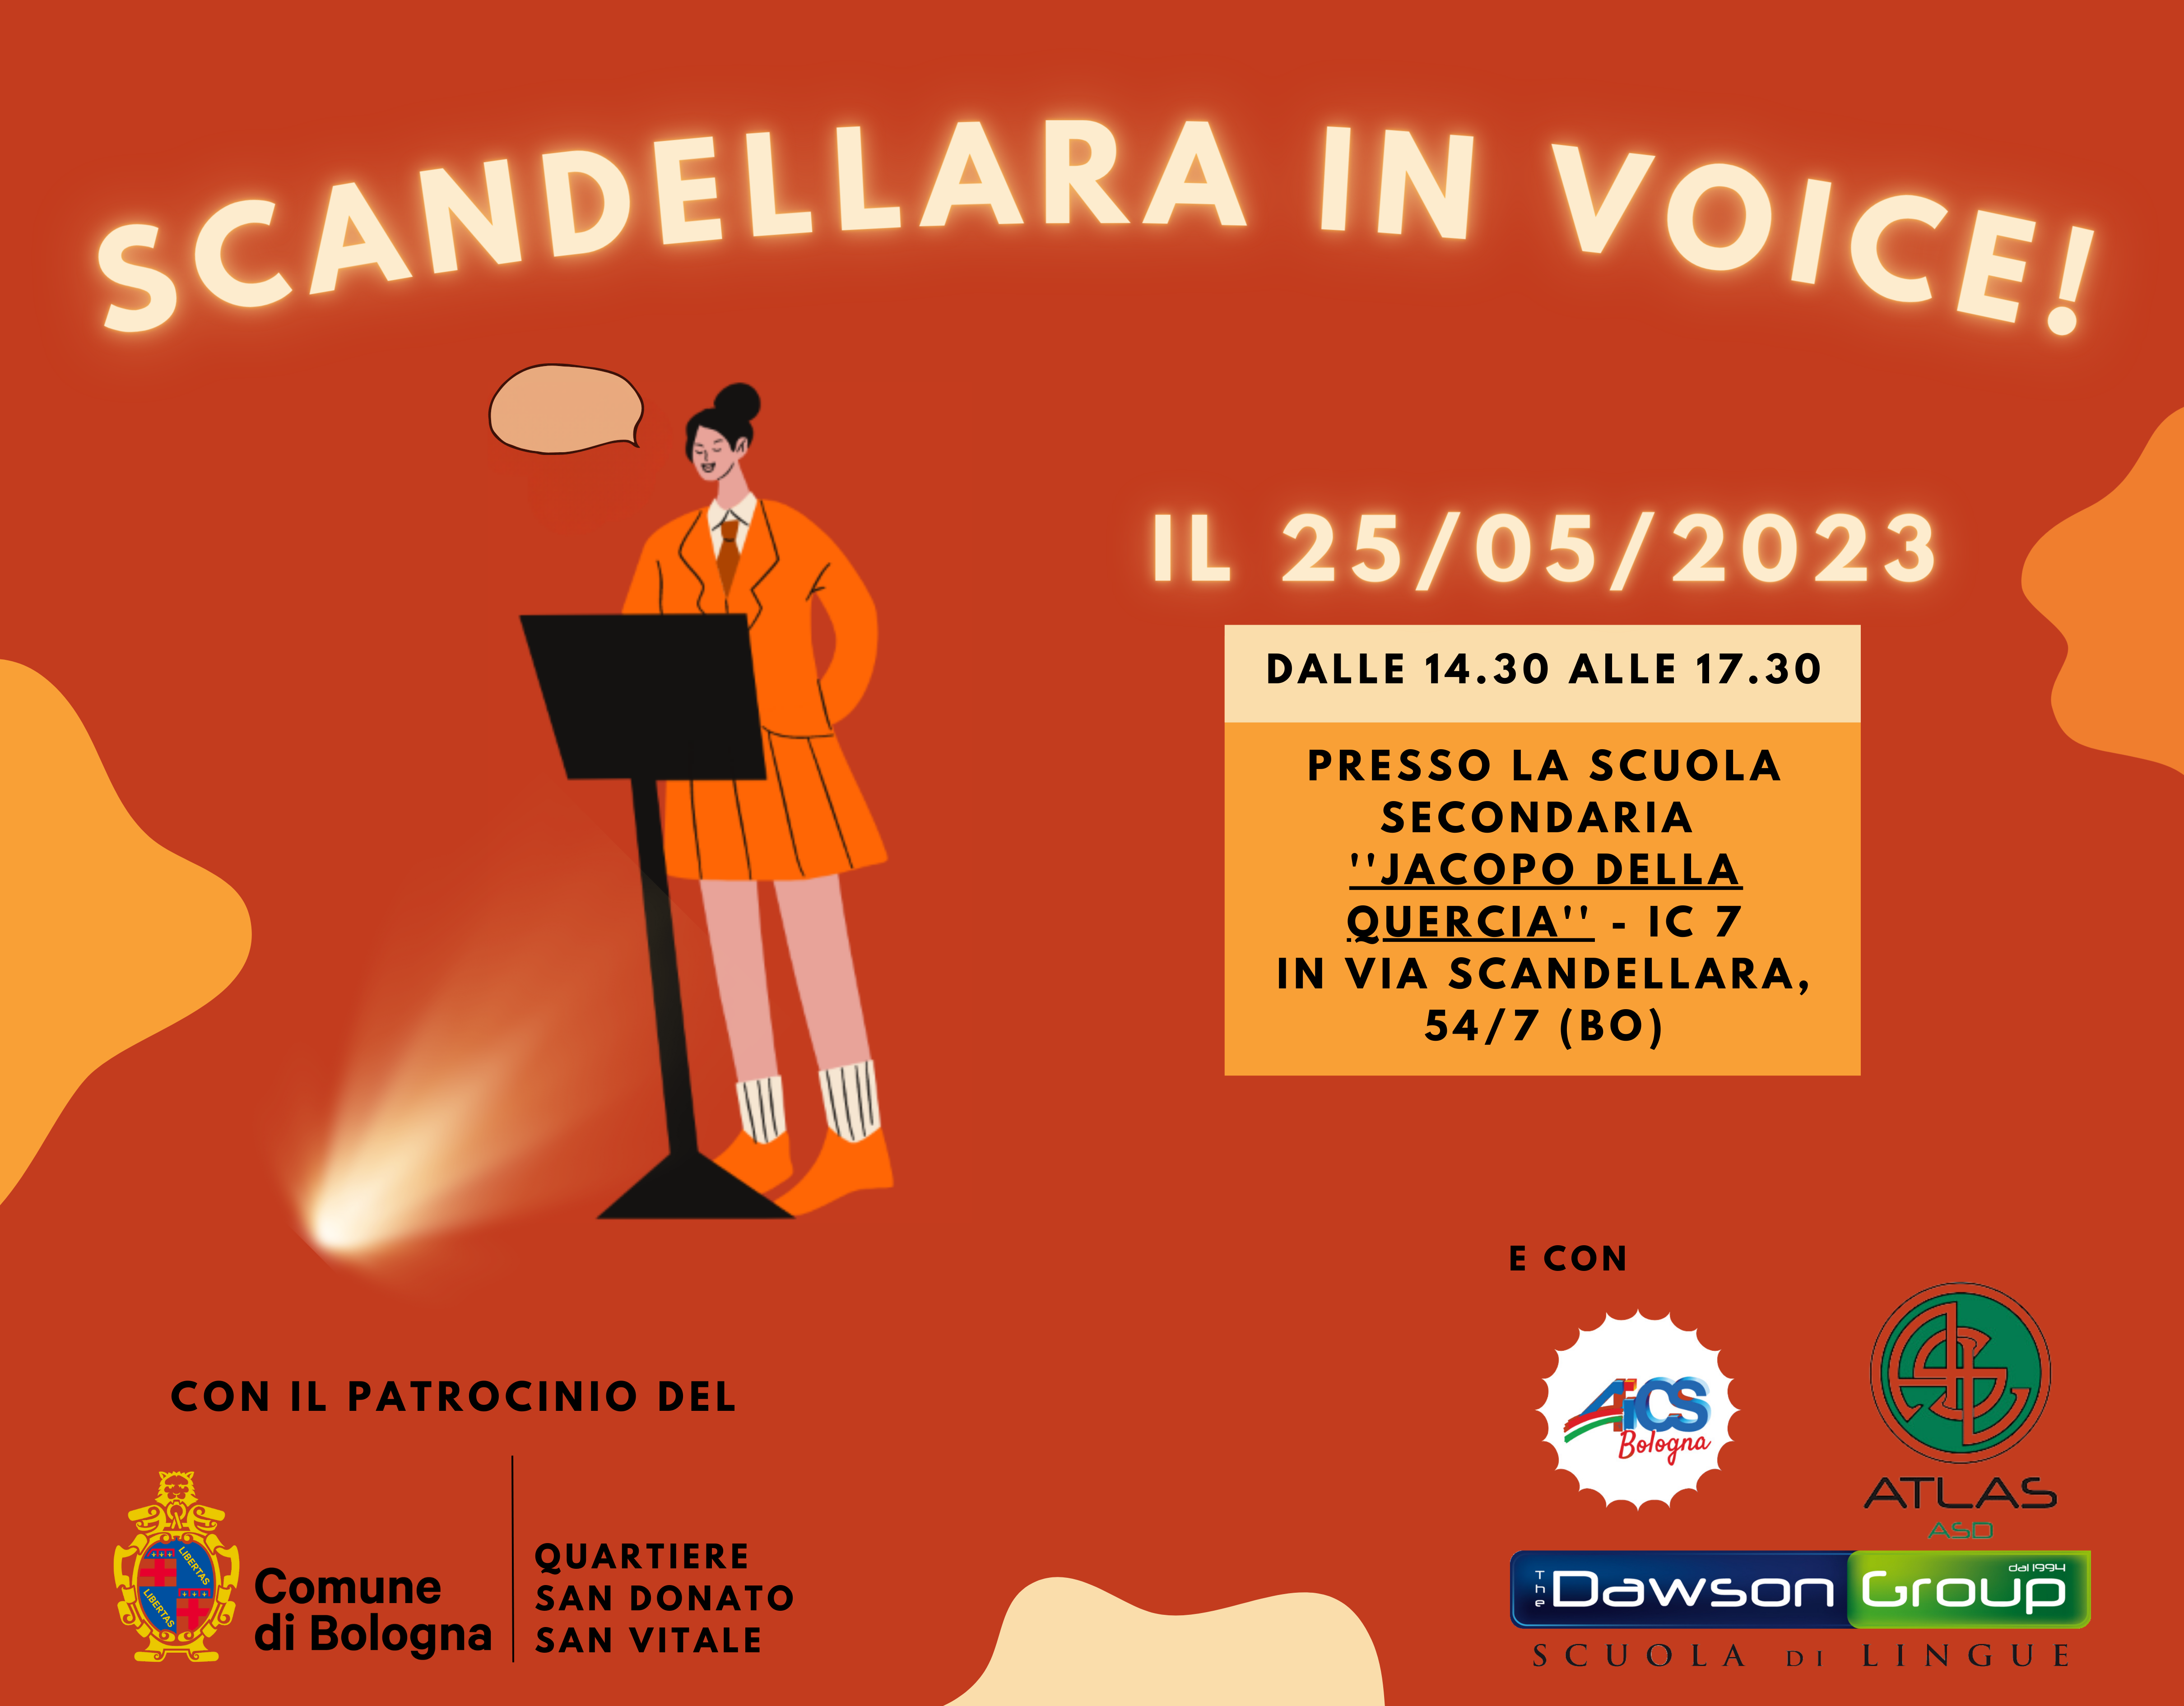 Volantino-Scandellara-in-voce-1